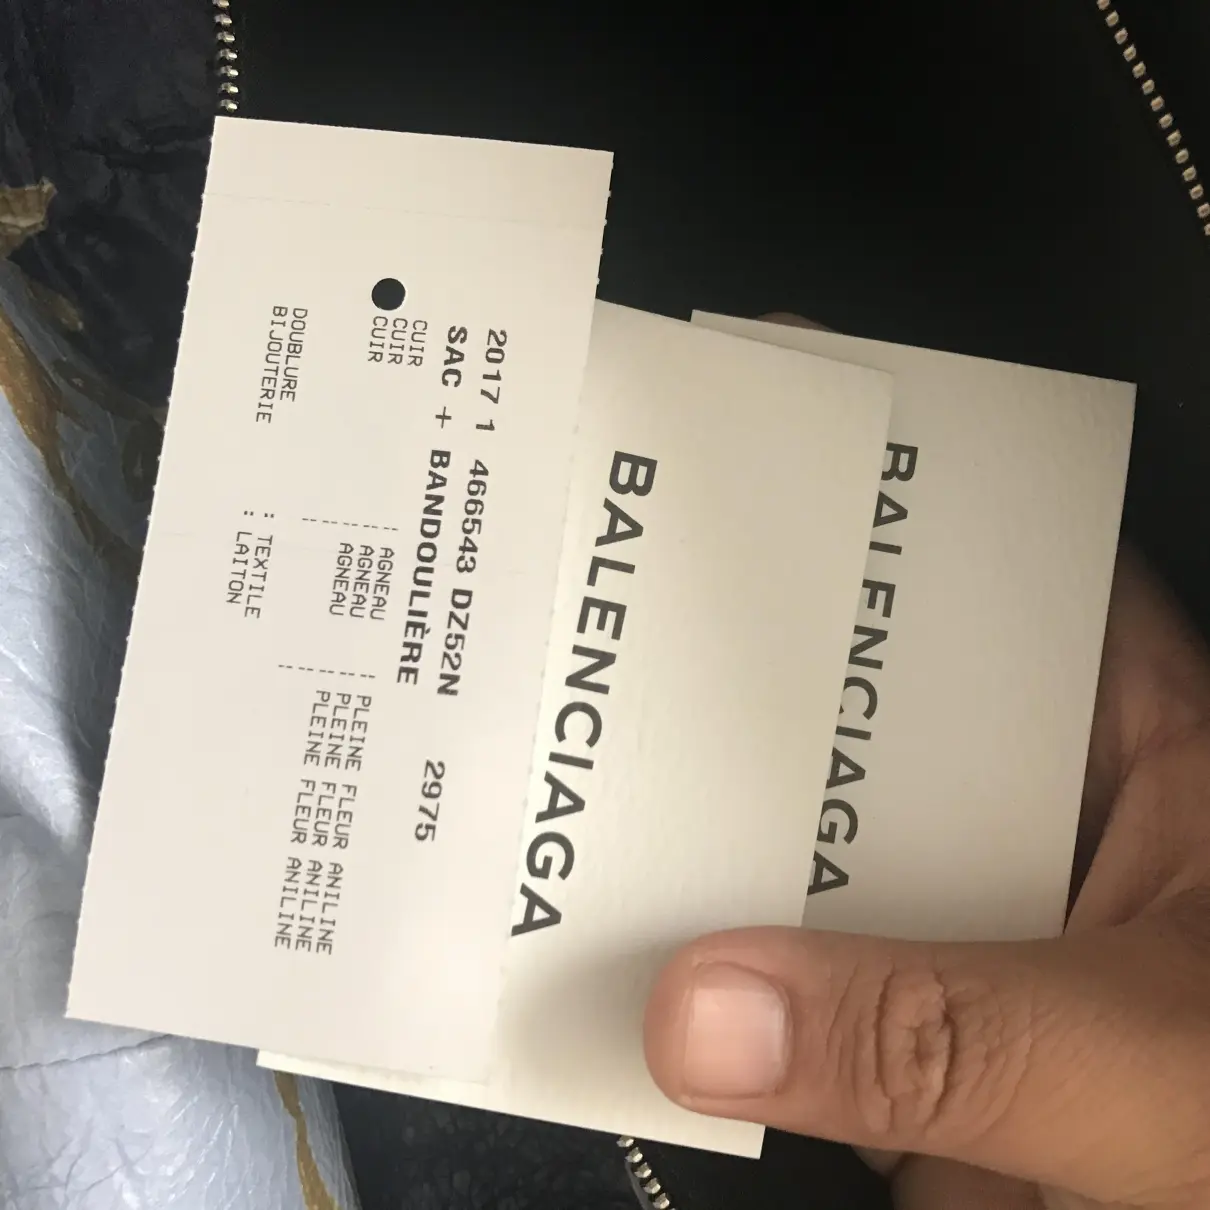 Buy Balenciaga Blanket leather tote online